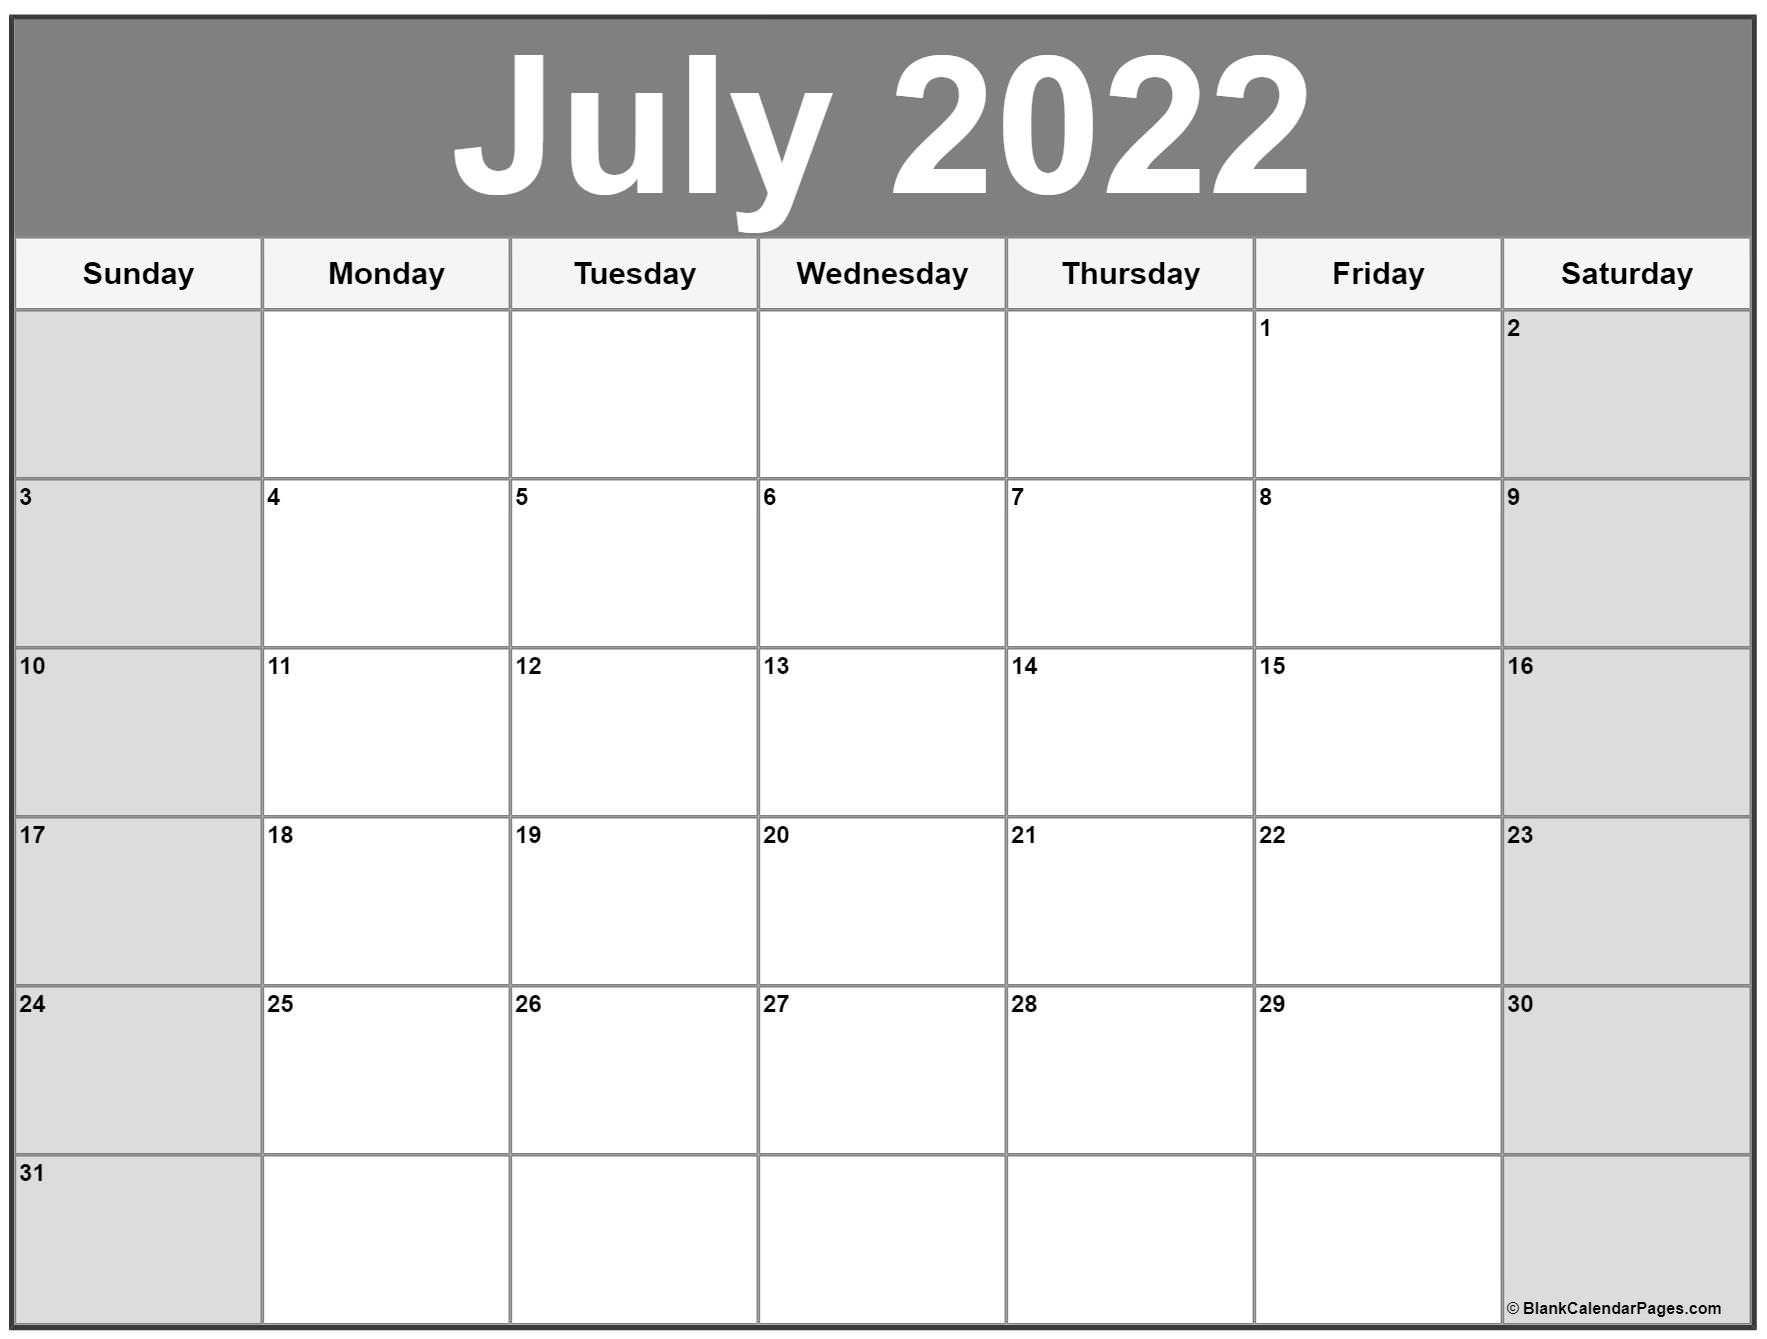 July 2022 Calendar | Free Printable Calendar Templates  August 2022 To July 2022 Calendar Printable